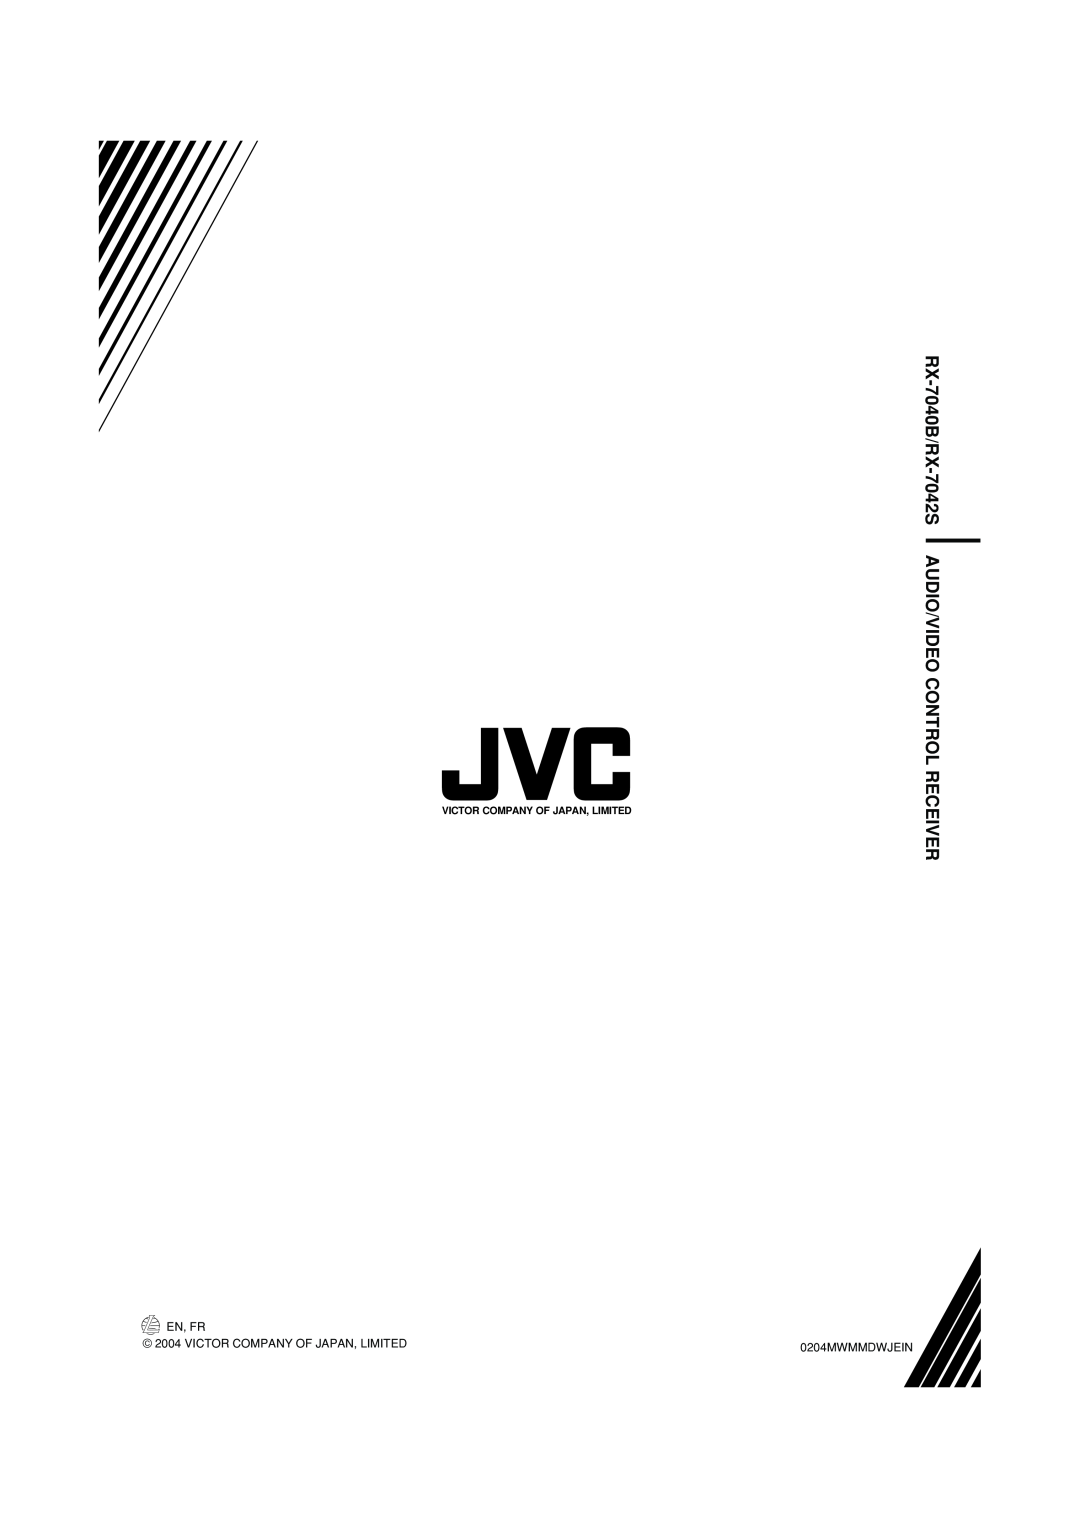 JVC manual RX-7040B/RX-7042SAUDIO/VIDEO CONTROL RECEIVER, En, Fr, Victor Company Of Japan, Limited, 0204MWMMDWJEIN 